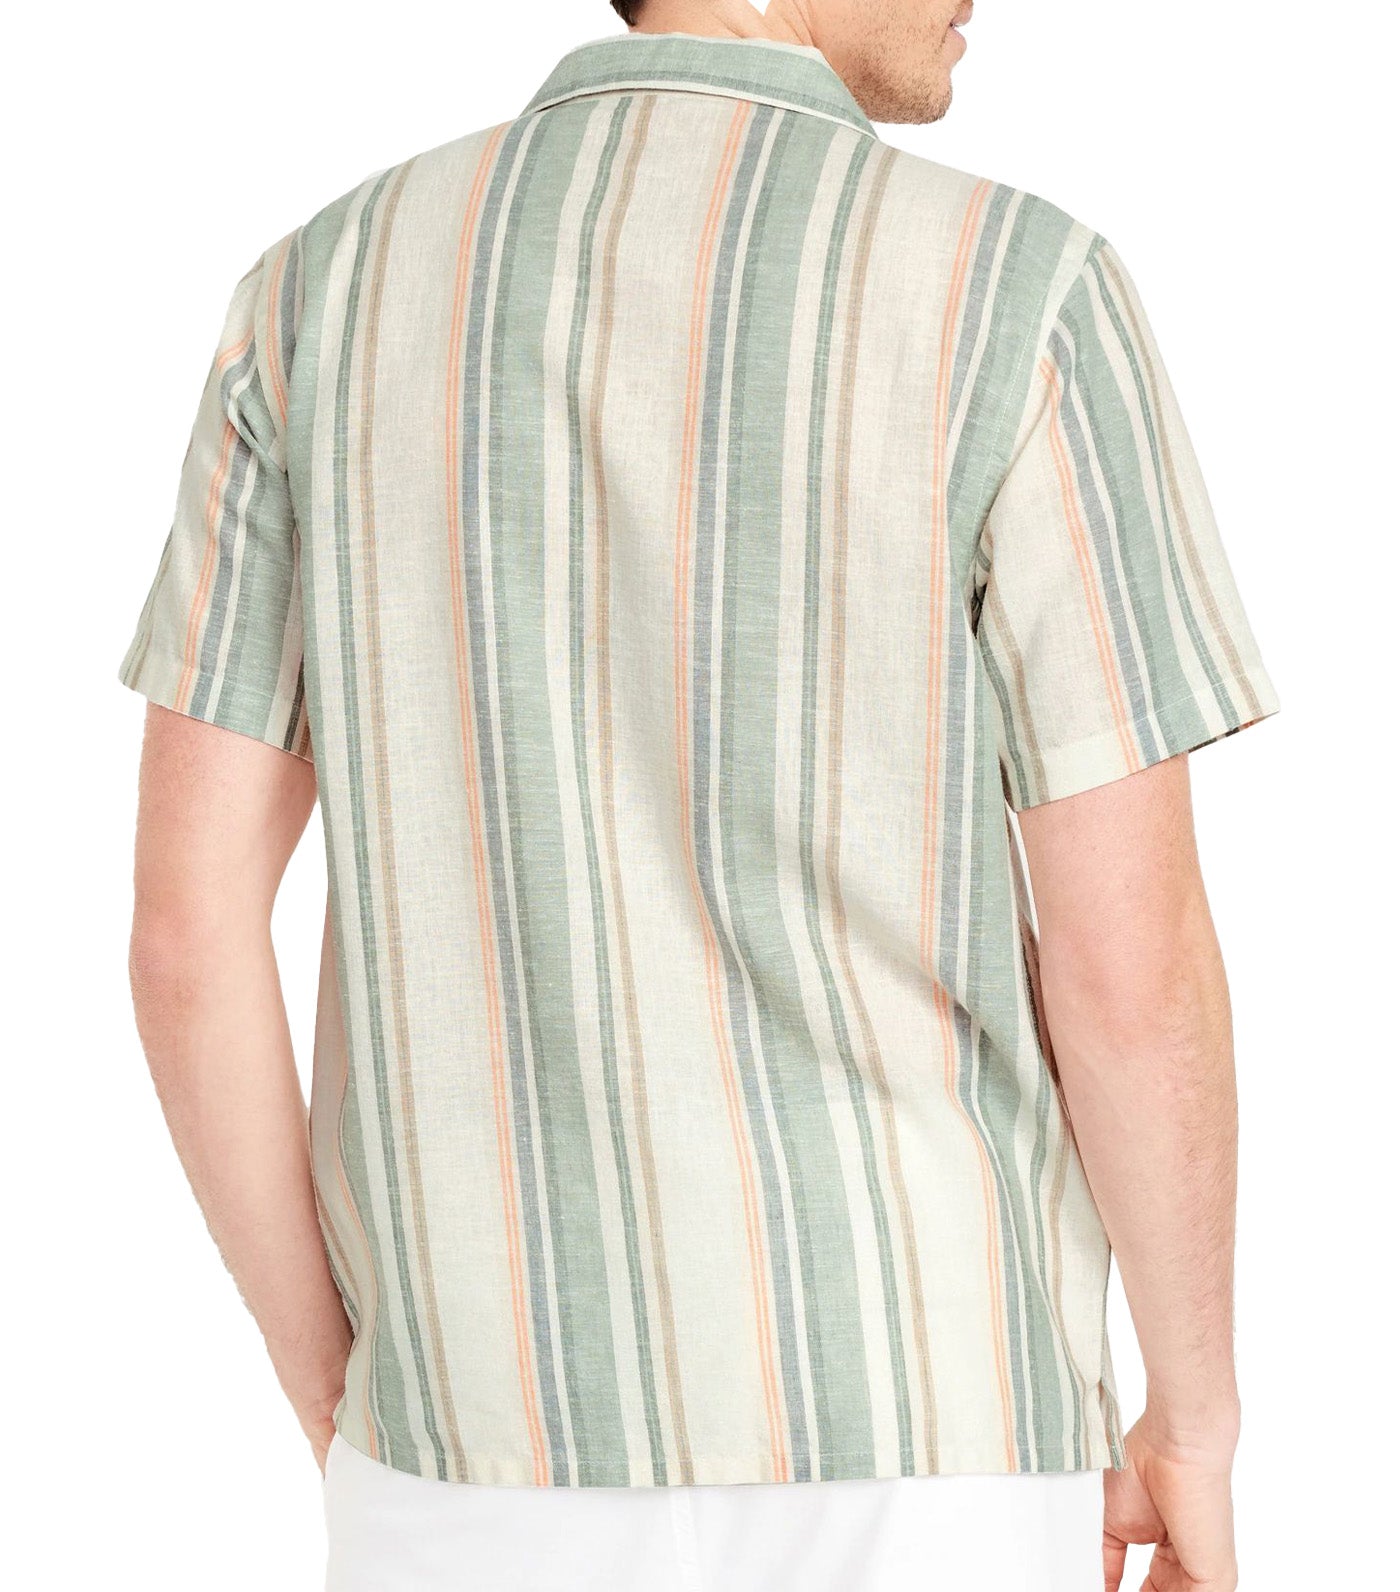 Short-Sleeve Printed Camp Shirt for Men Blue/Green Stripe